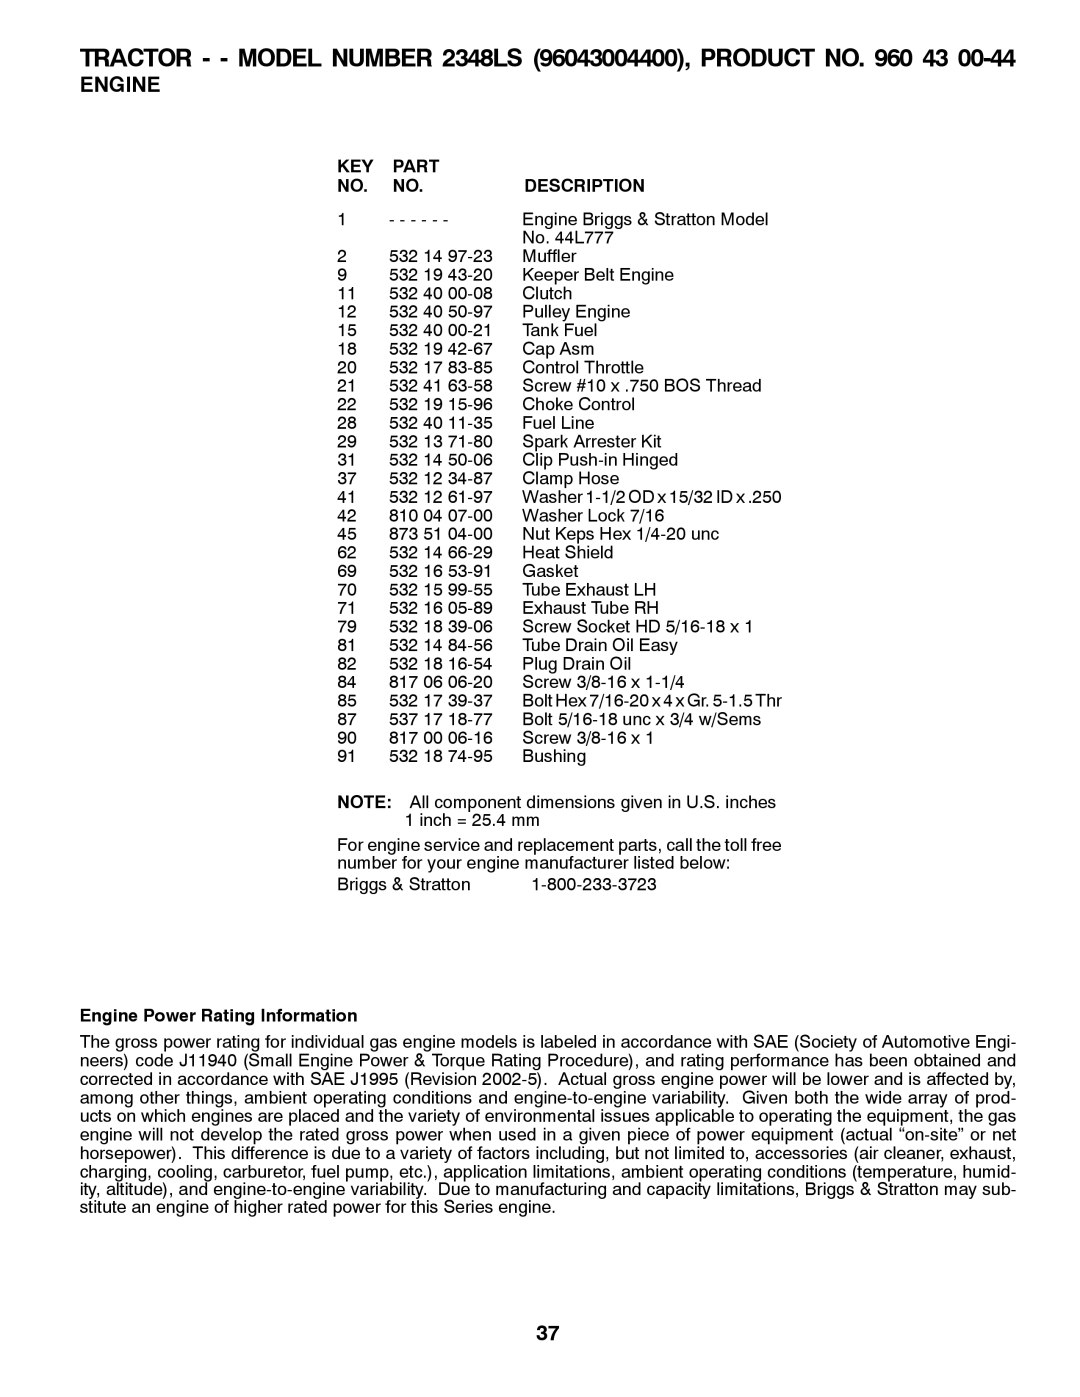 Univex 2348LS, 96043004400 owner manual Part, Description, Engine Power Rating Information 